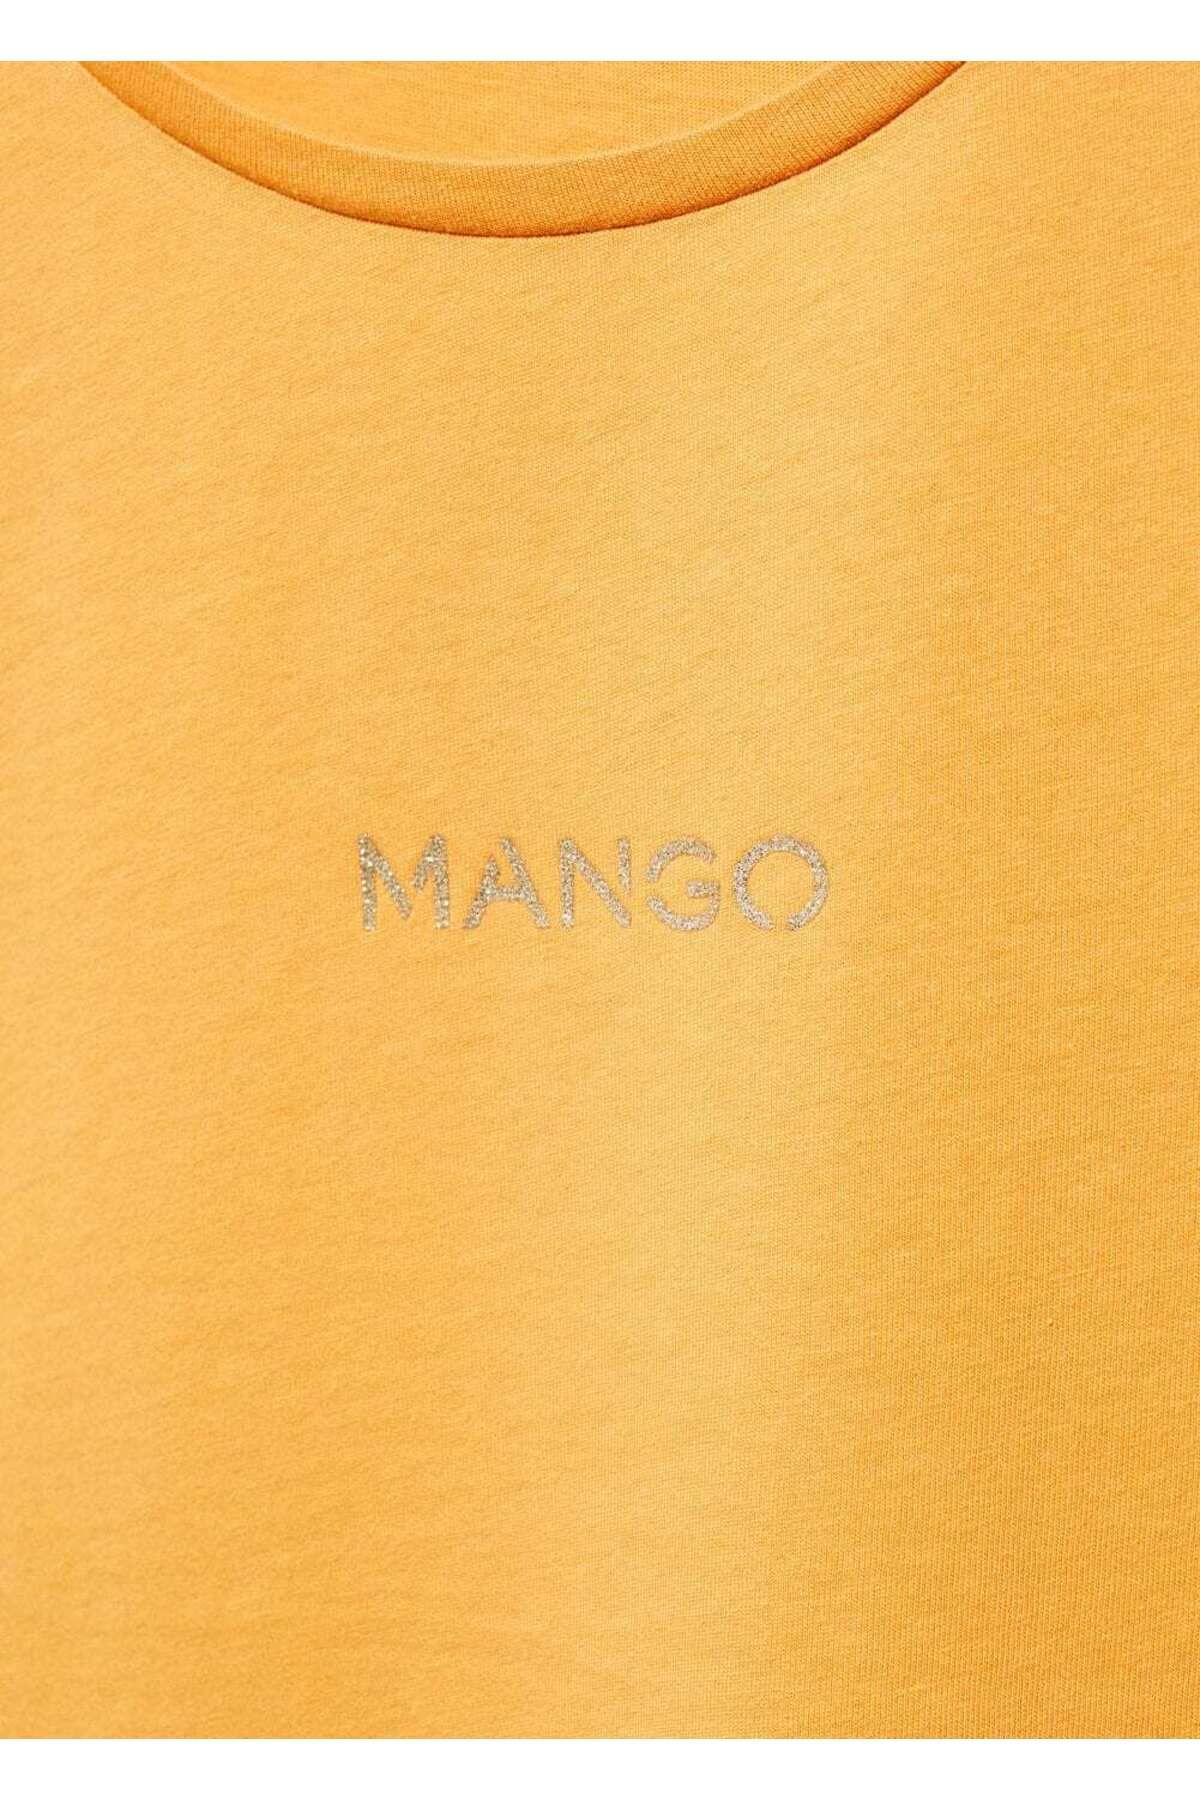 MANGO MANGO تی شرت با لوگوی پنبه ای